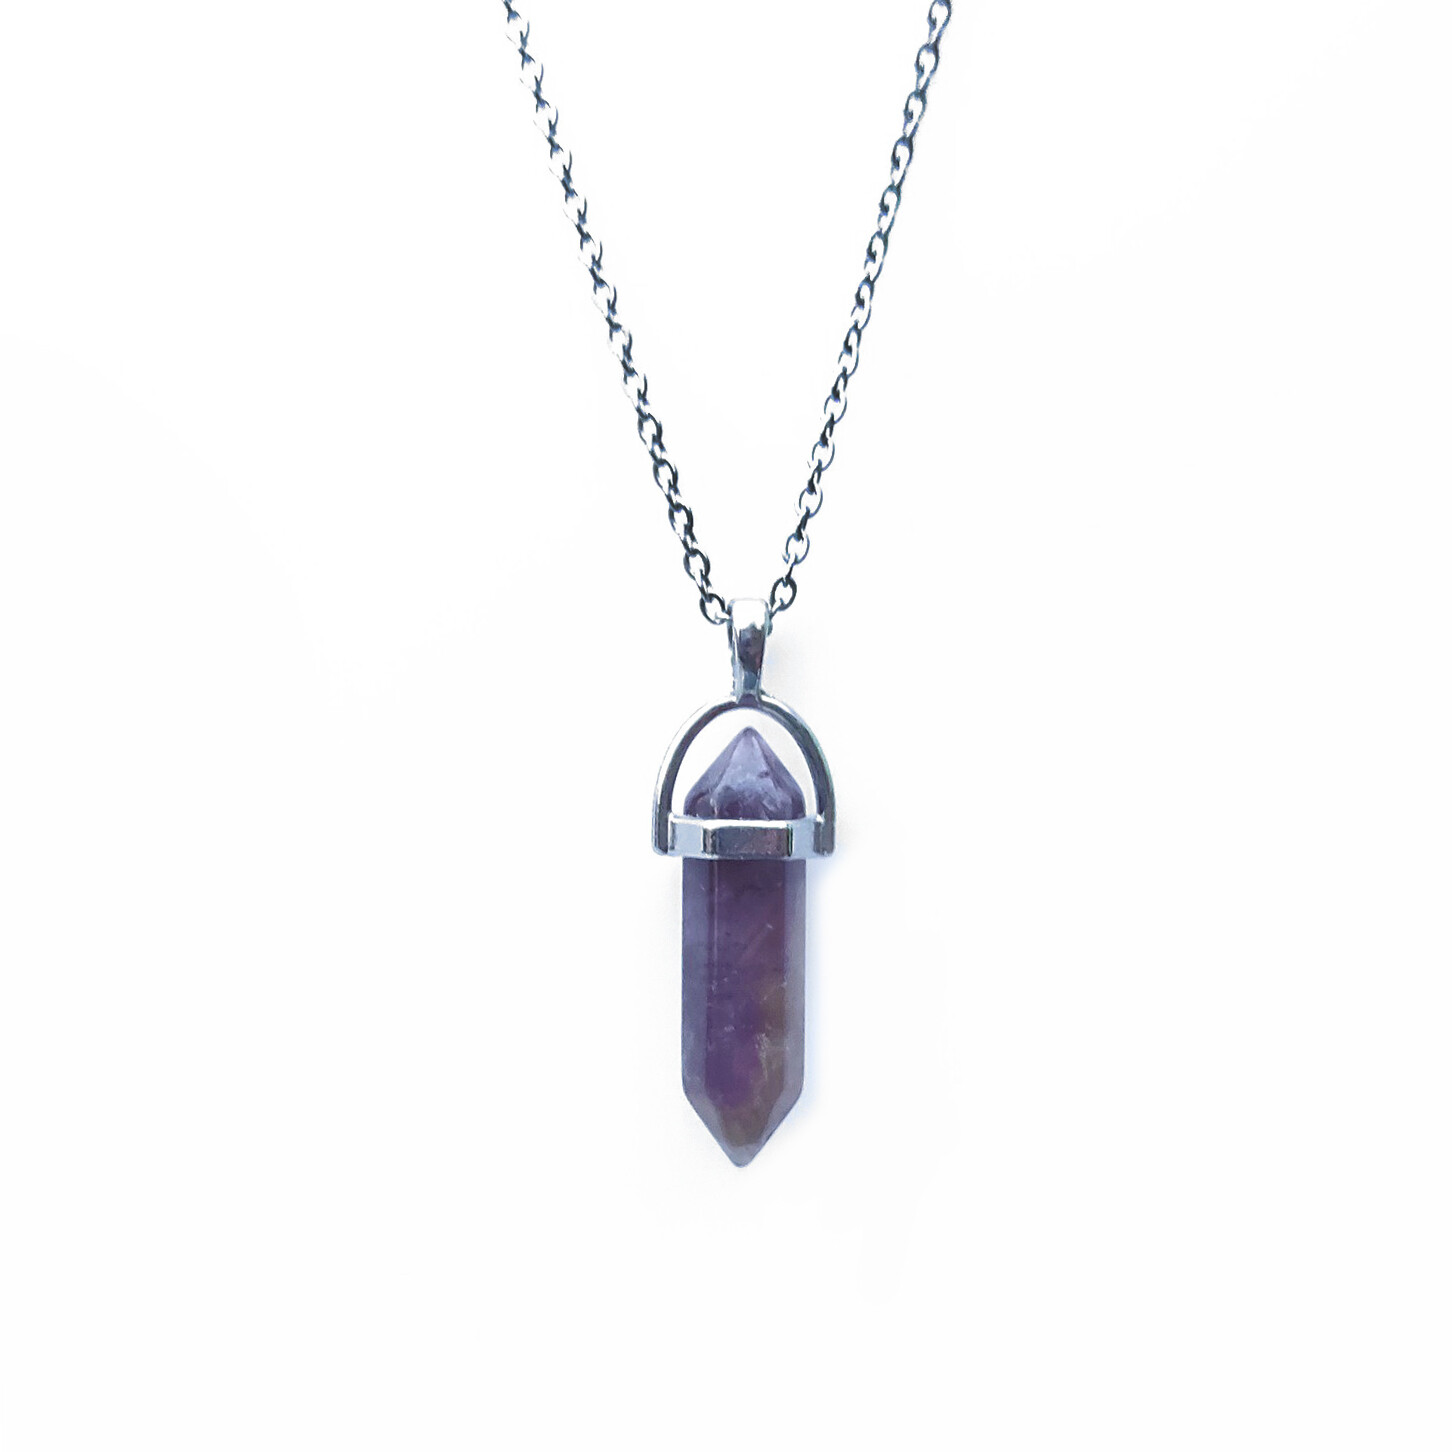 Amethyst pendant gemstone necklace